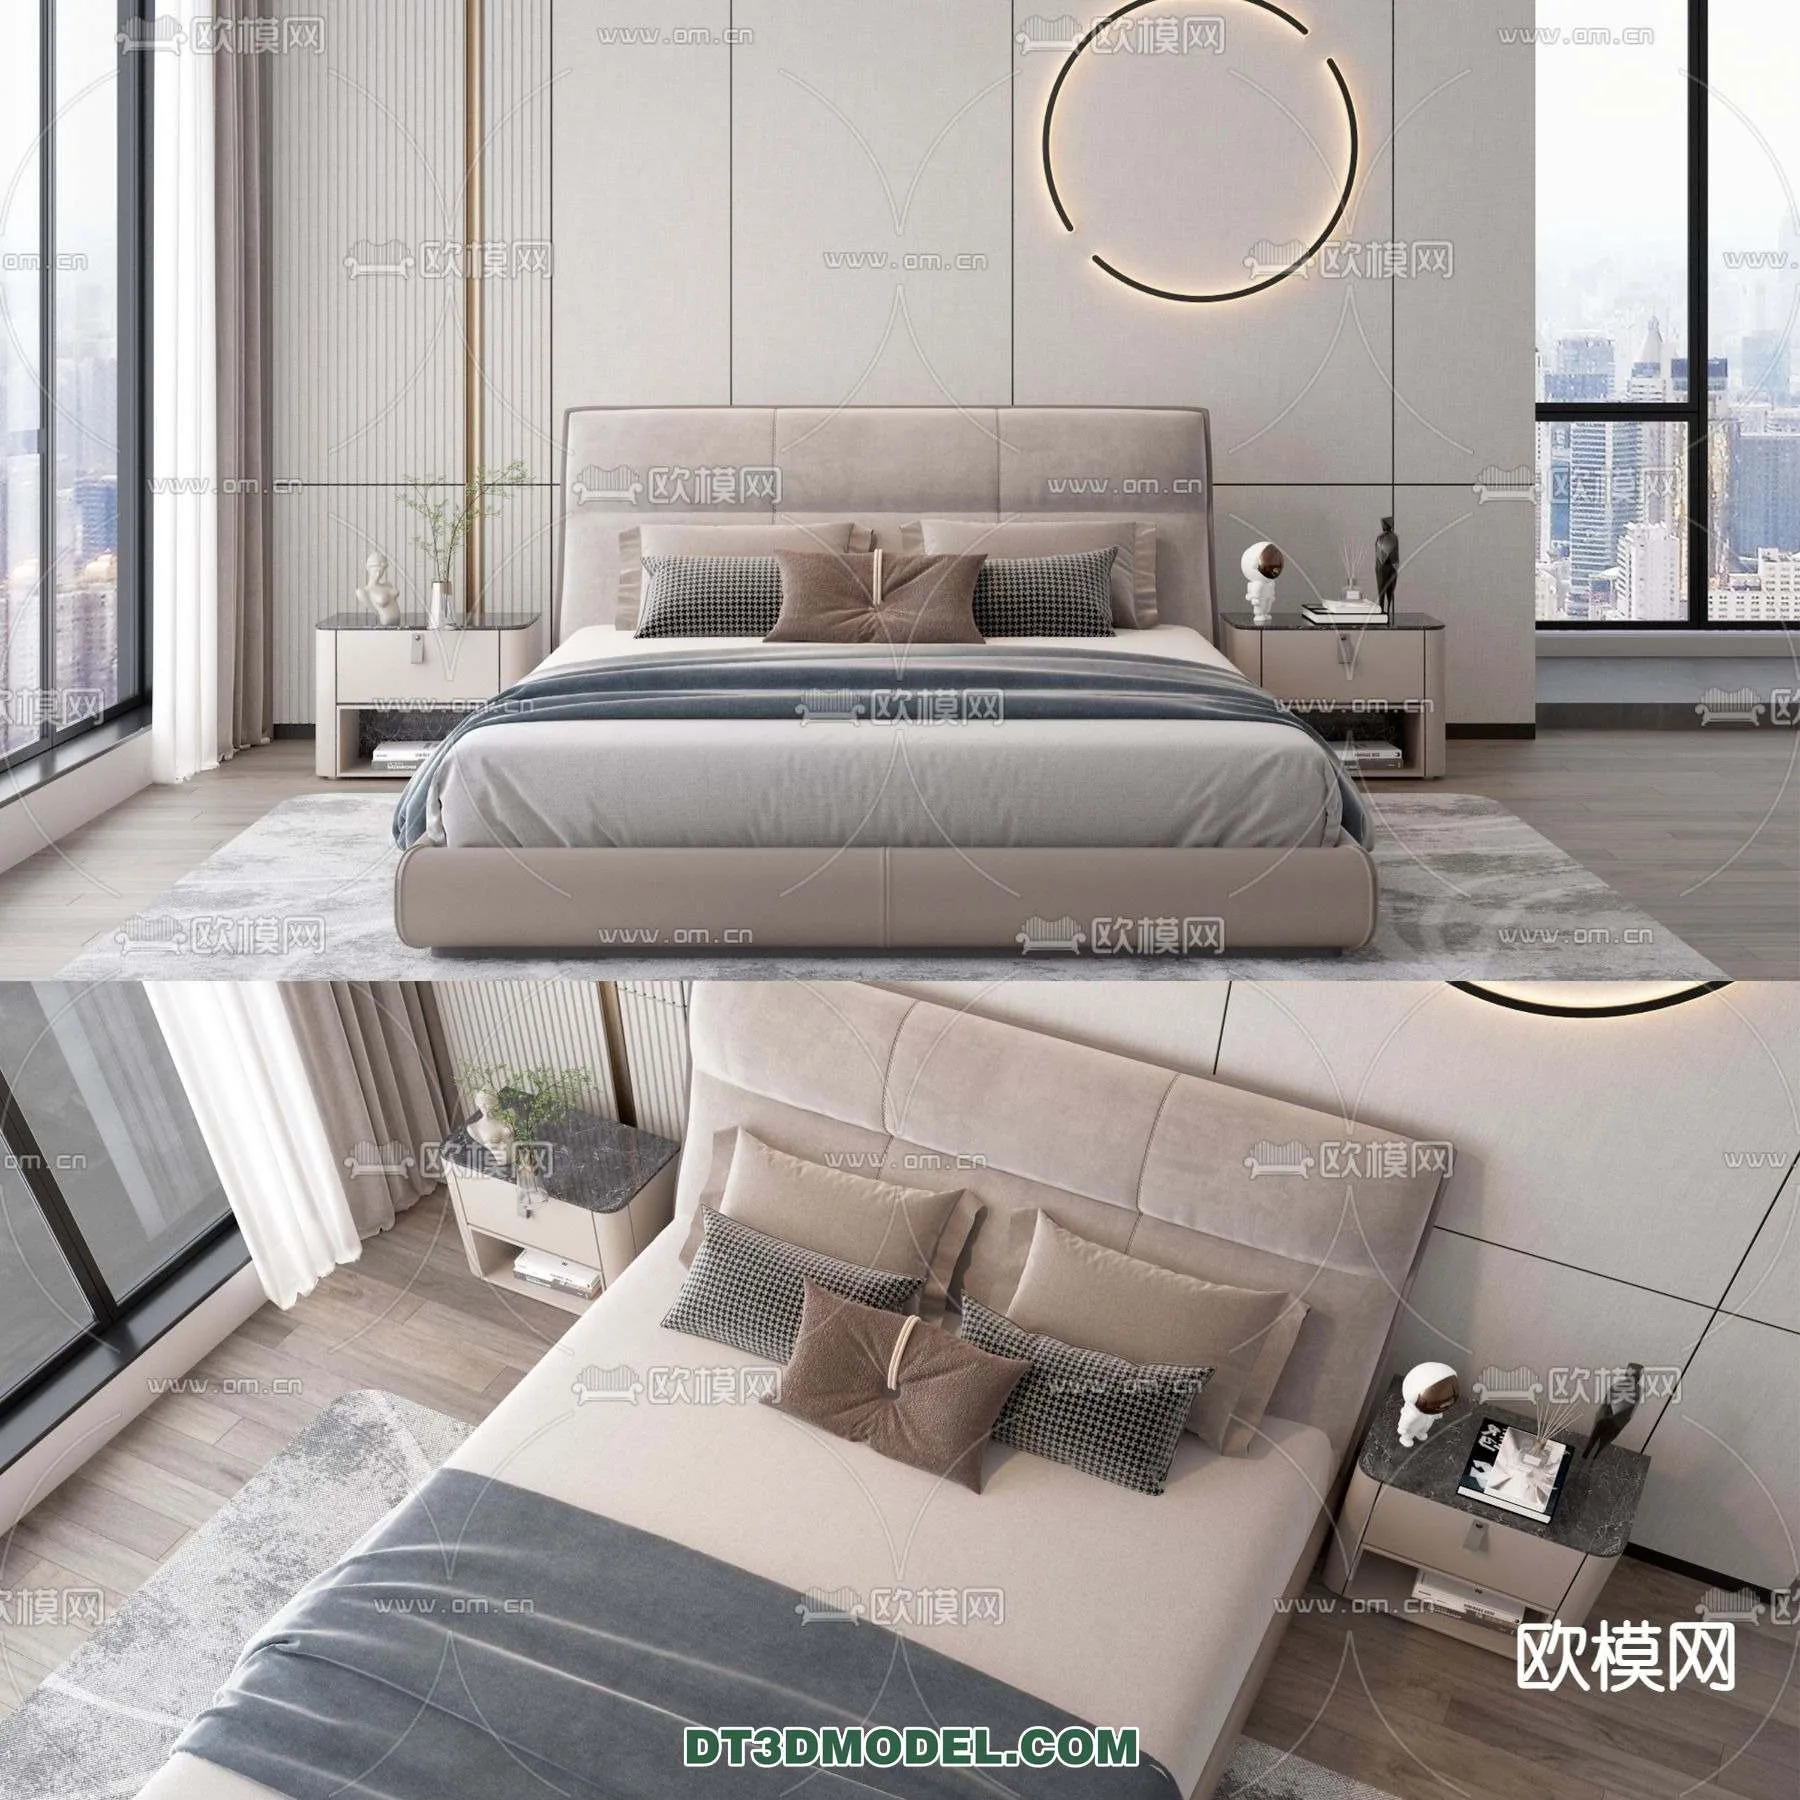 Double Bed 3D Models – 0035